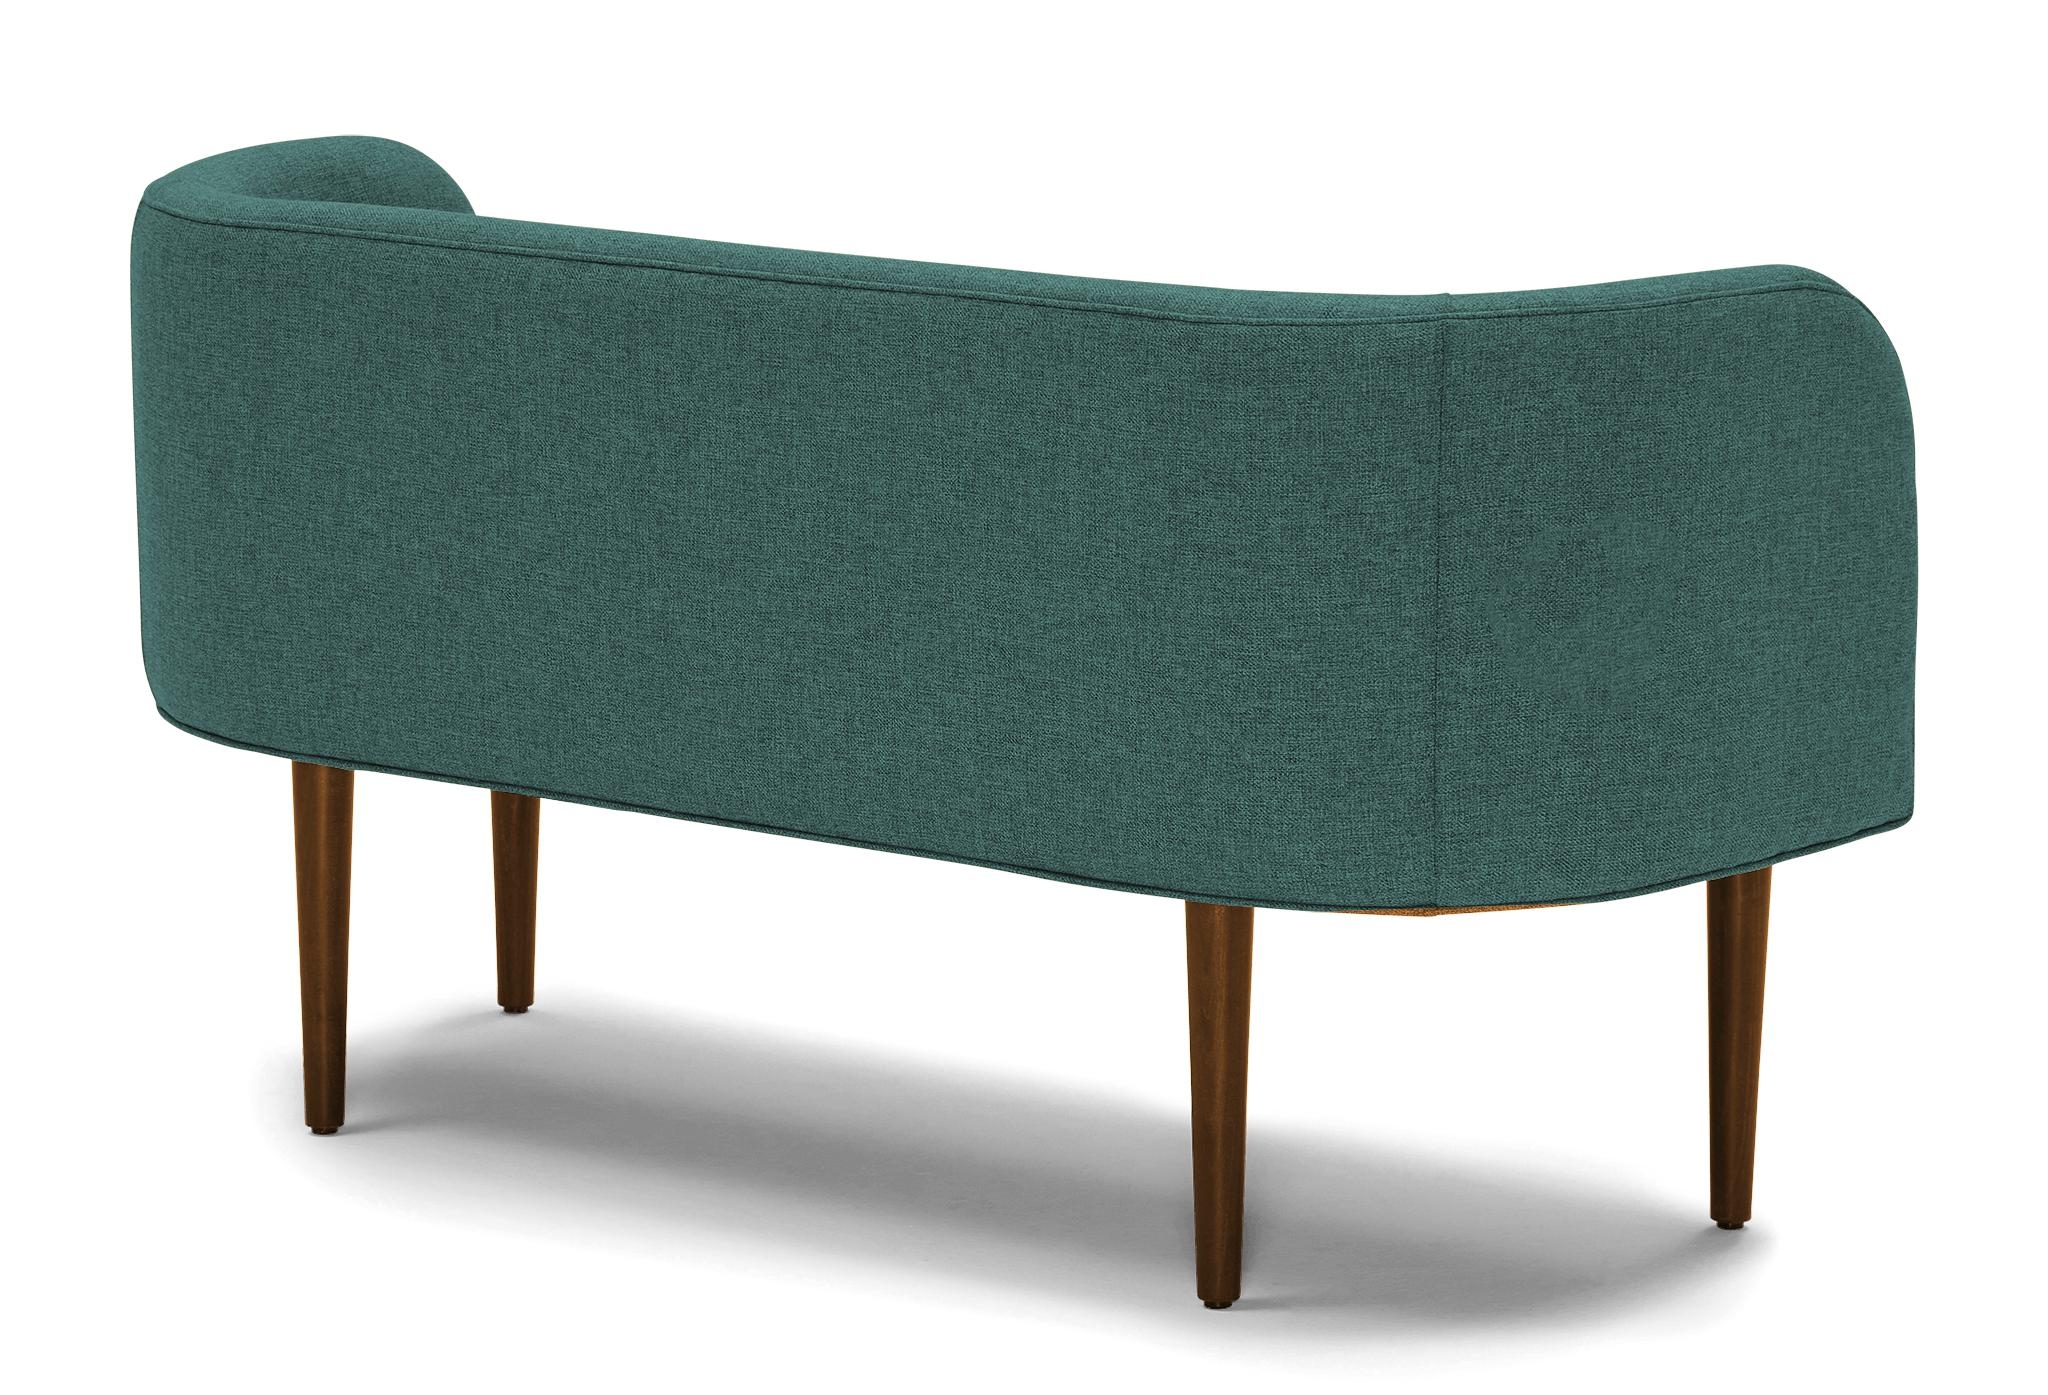 Green Elsie Mid Century Modern Bench - Essence Aqua - Mocha - Image 3